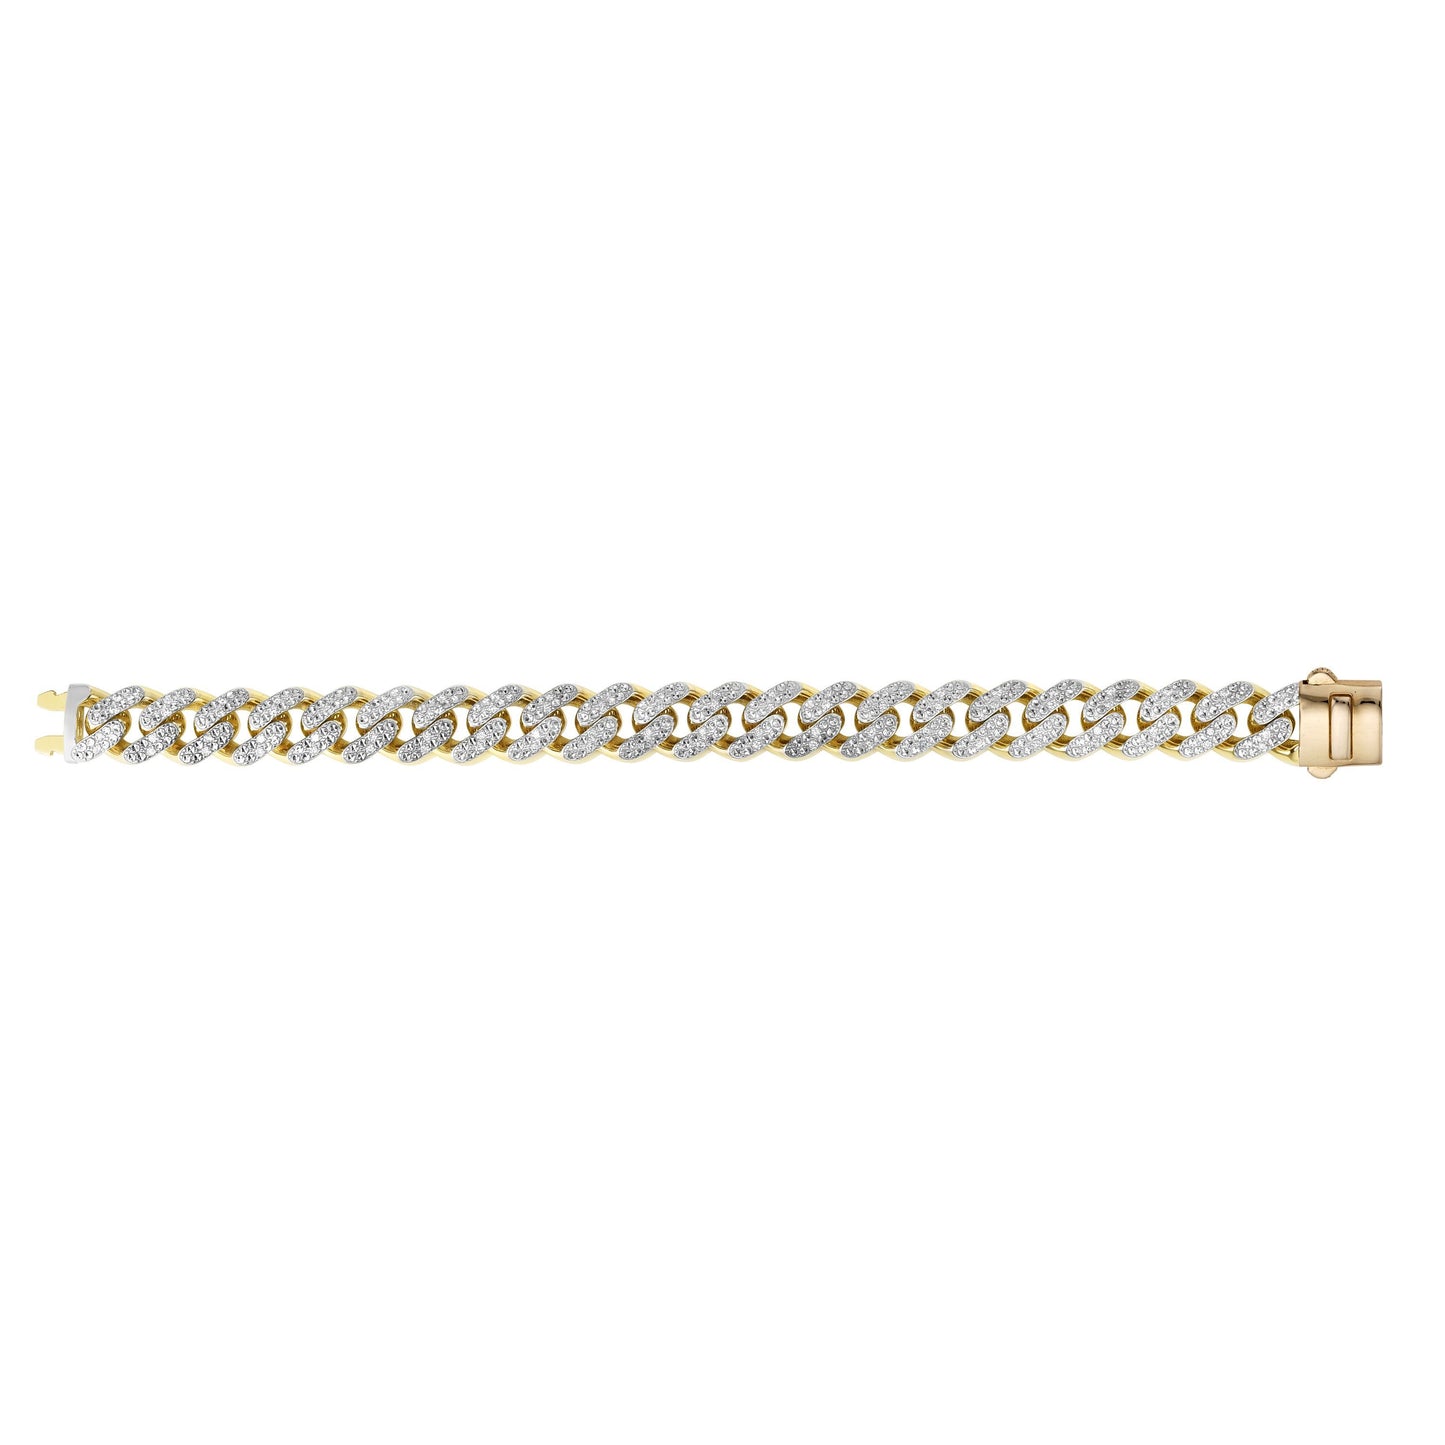 Cuban White Pave Curb Link Bracelet 8.5" Inch - Laura's Gems